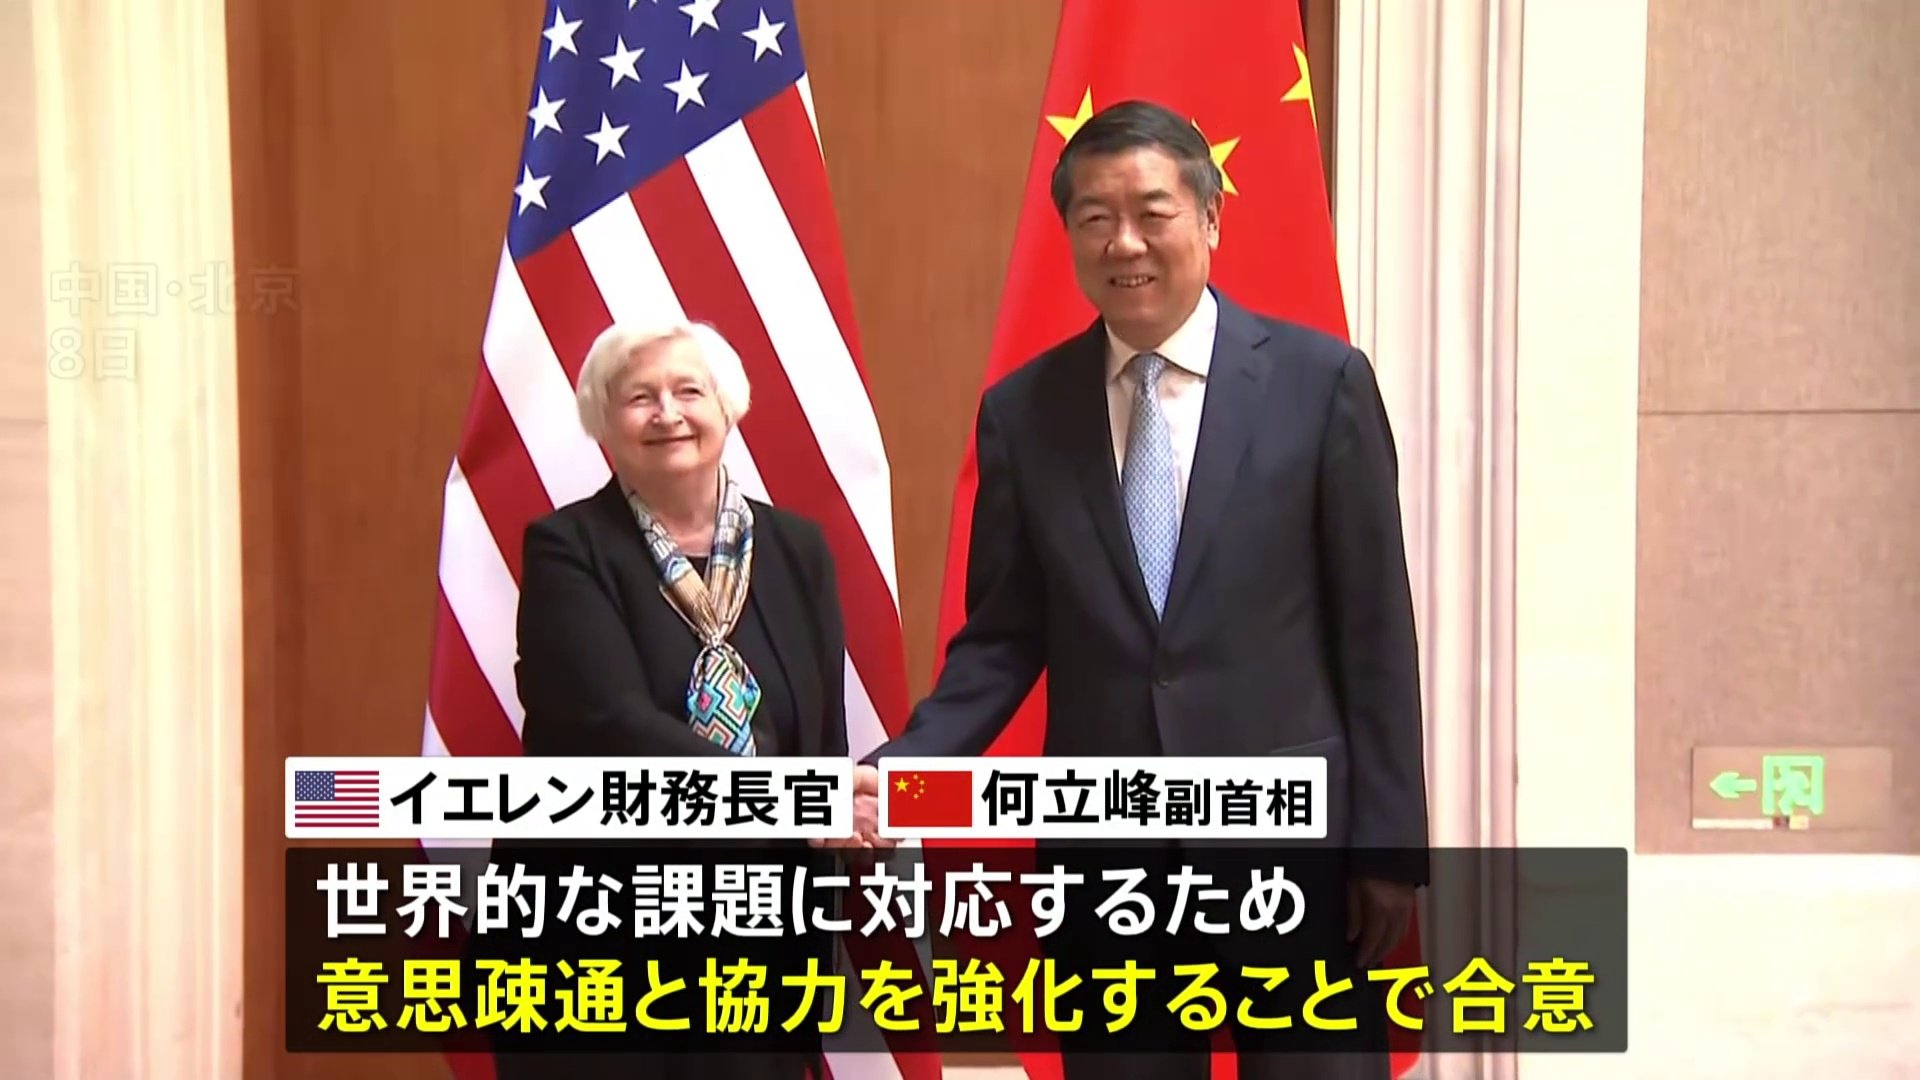 米財務長官 中国副首相と会談、意思疎通と協力強化で合意